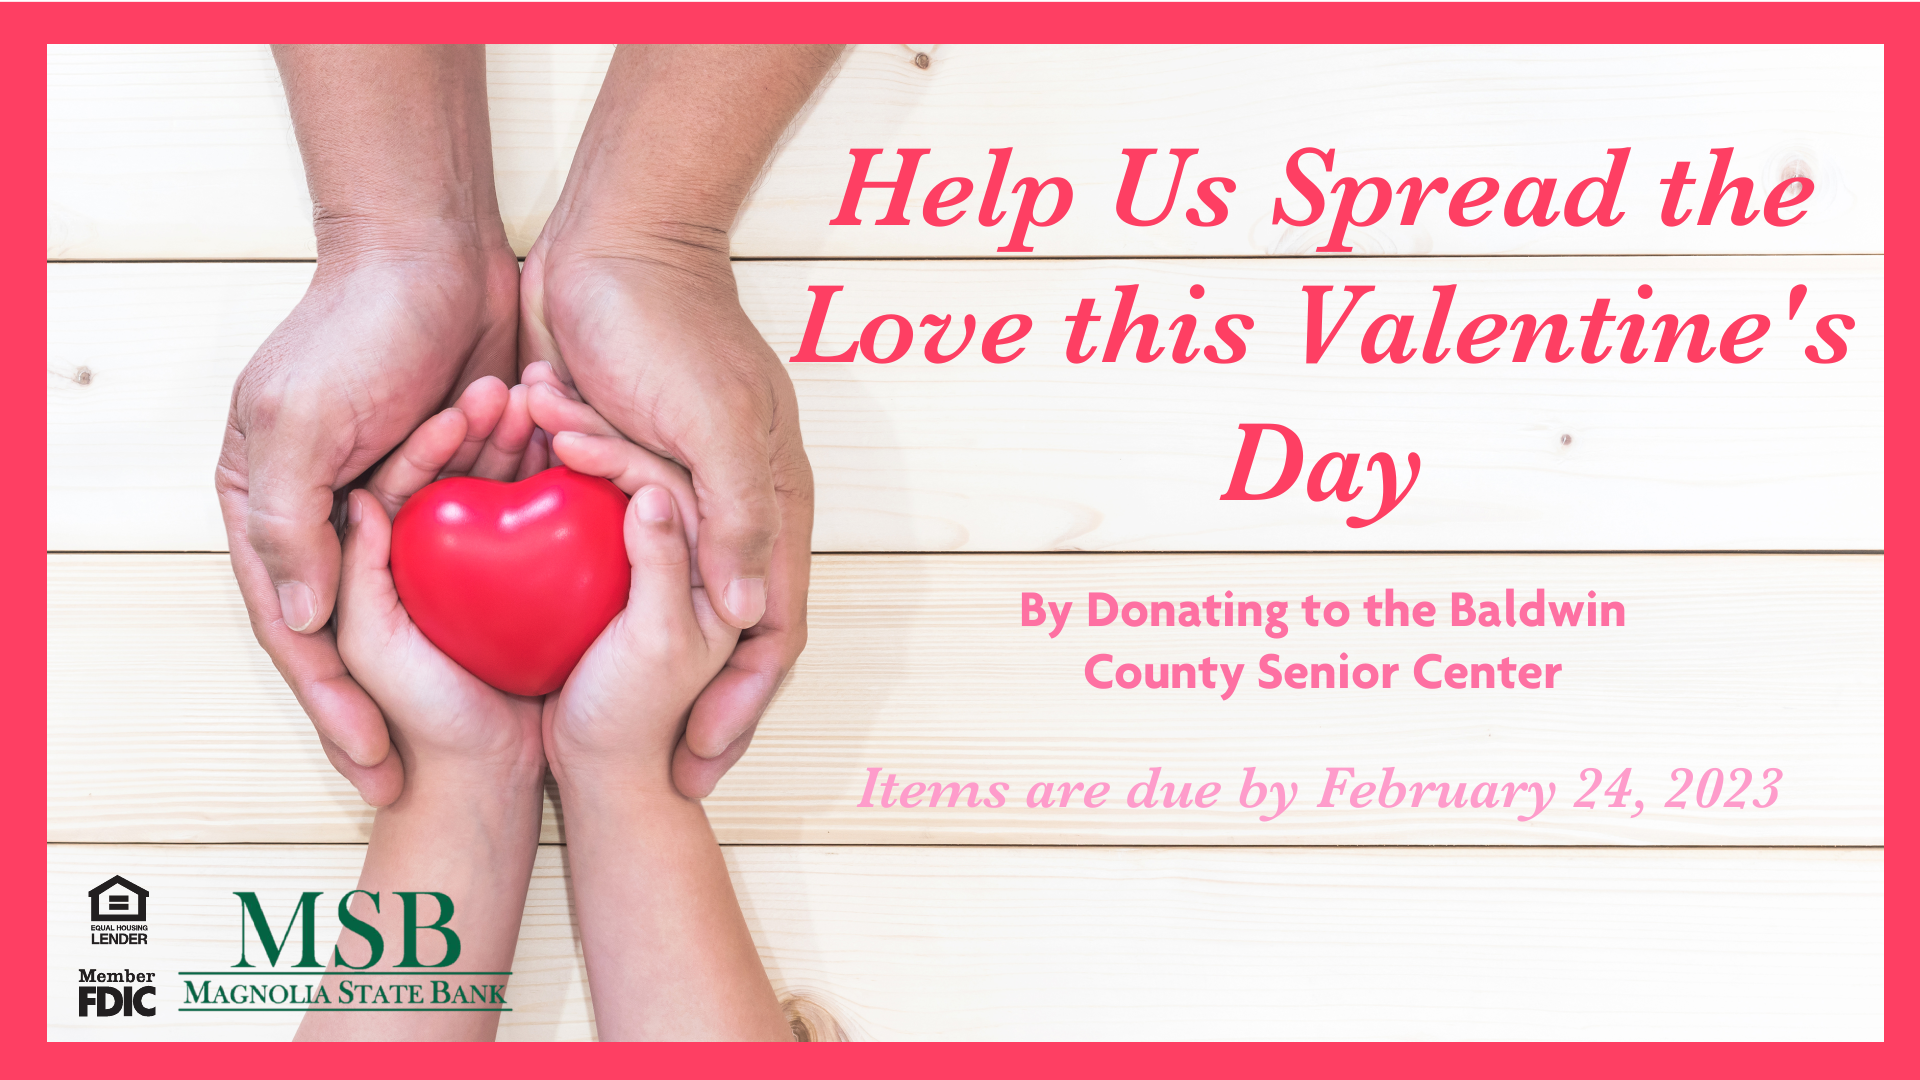 Senior center donation drive